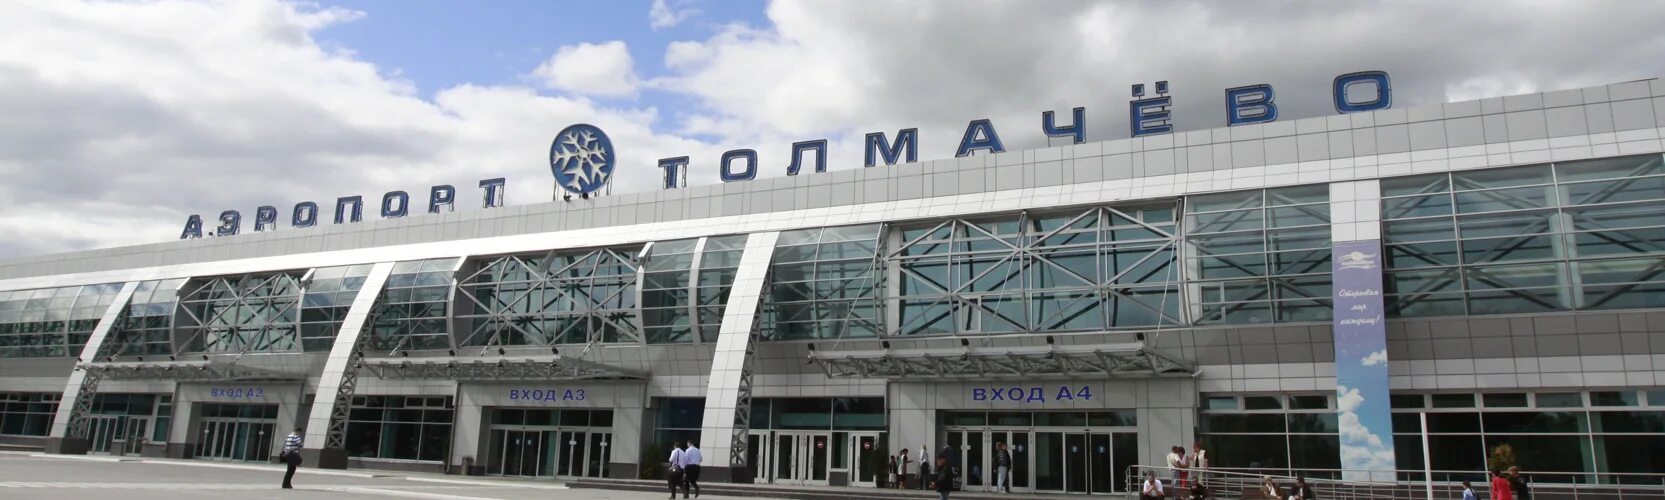 Новосибирск аэропорт вокзал такси. Аэропорт Толмачево Новосибирск. Аэропорт Толмачево 2000 год. Автовокзал Толмачево Новосибирск. Толмачево ЖД вокзал Новосибирск.